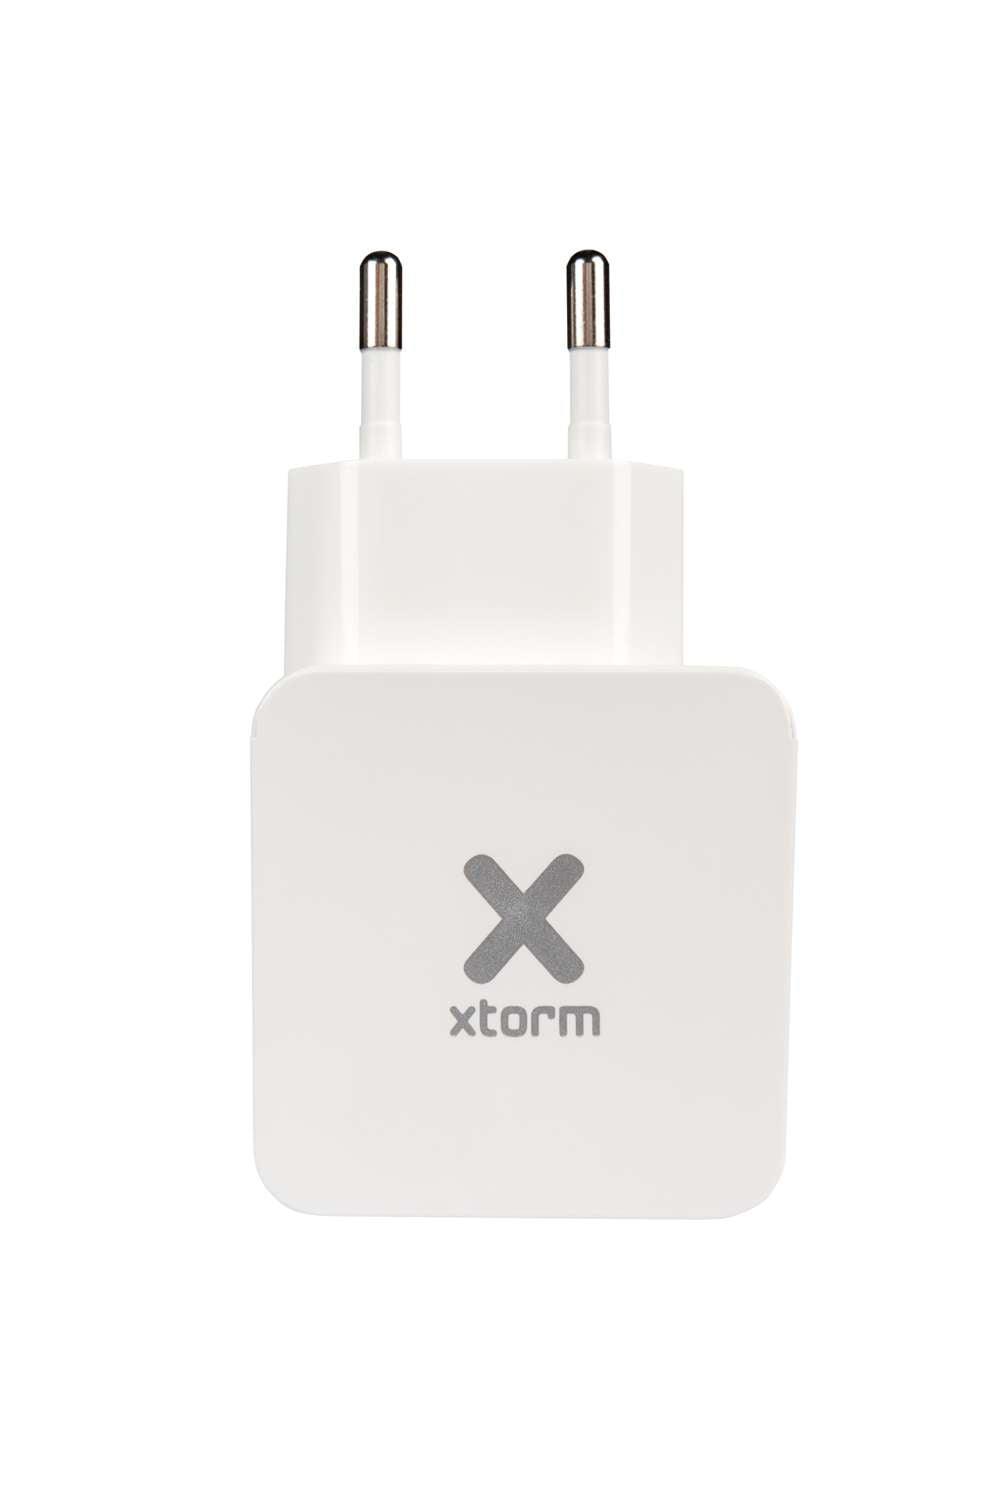 Xtorm Xtorm CX031 Original AC Adapter USB-C PD 18W + USB-C naar Lightning kabel